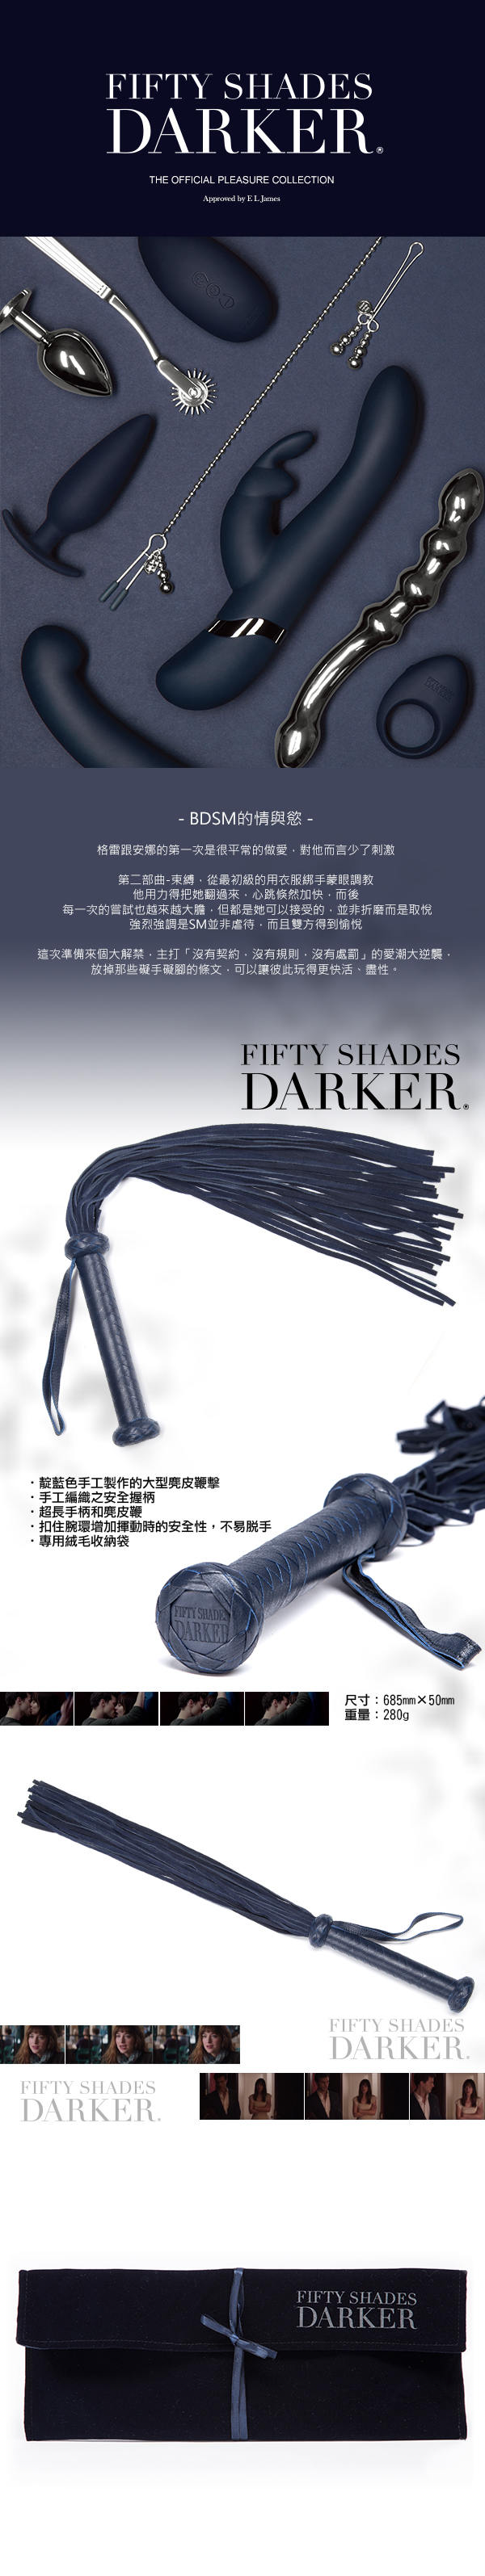 Fifty Shades Darker 格雷的五十道陰影2-束縛 你的陰暗面 麂皮手工編織 大型皮鞭